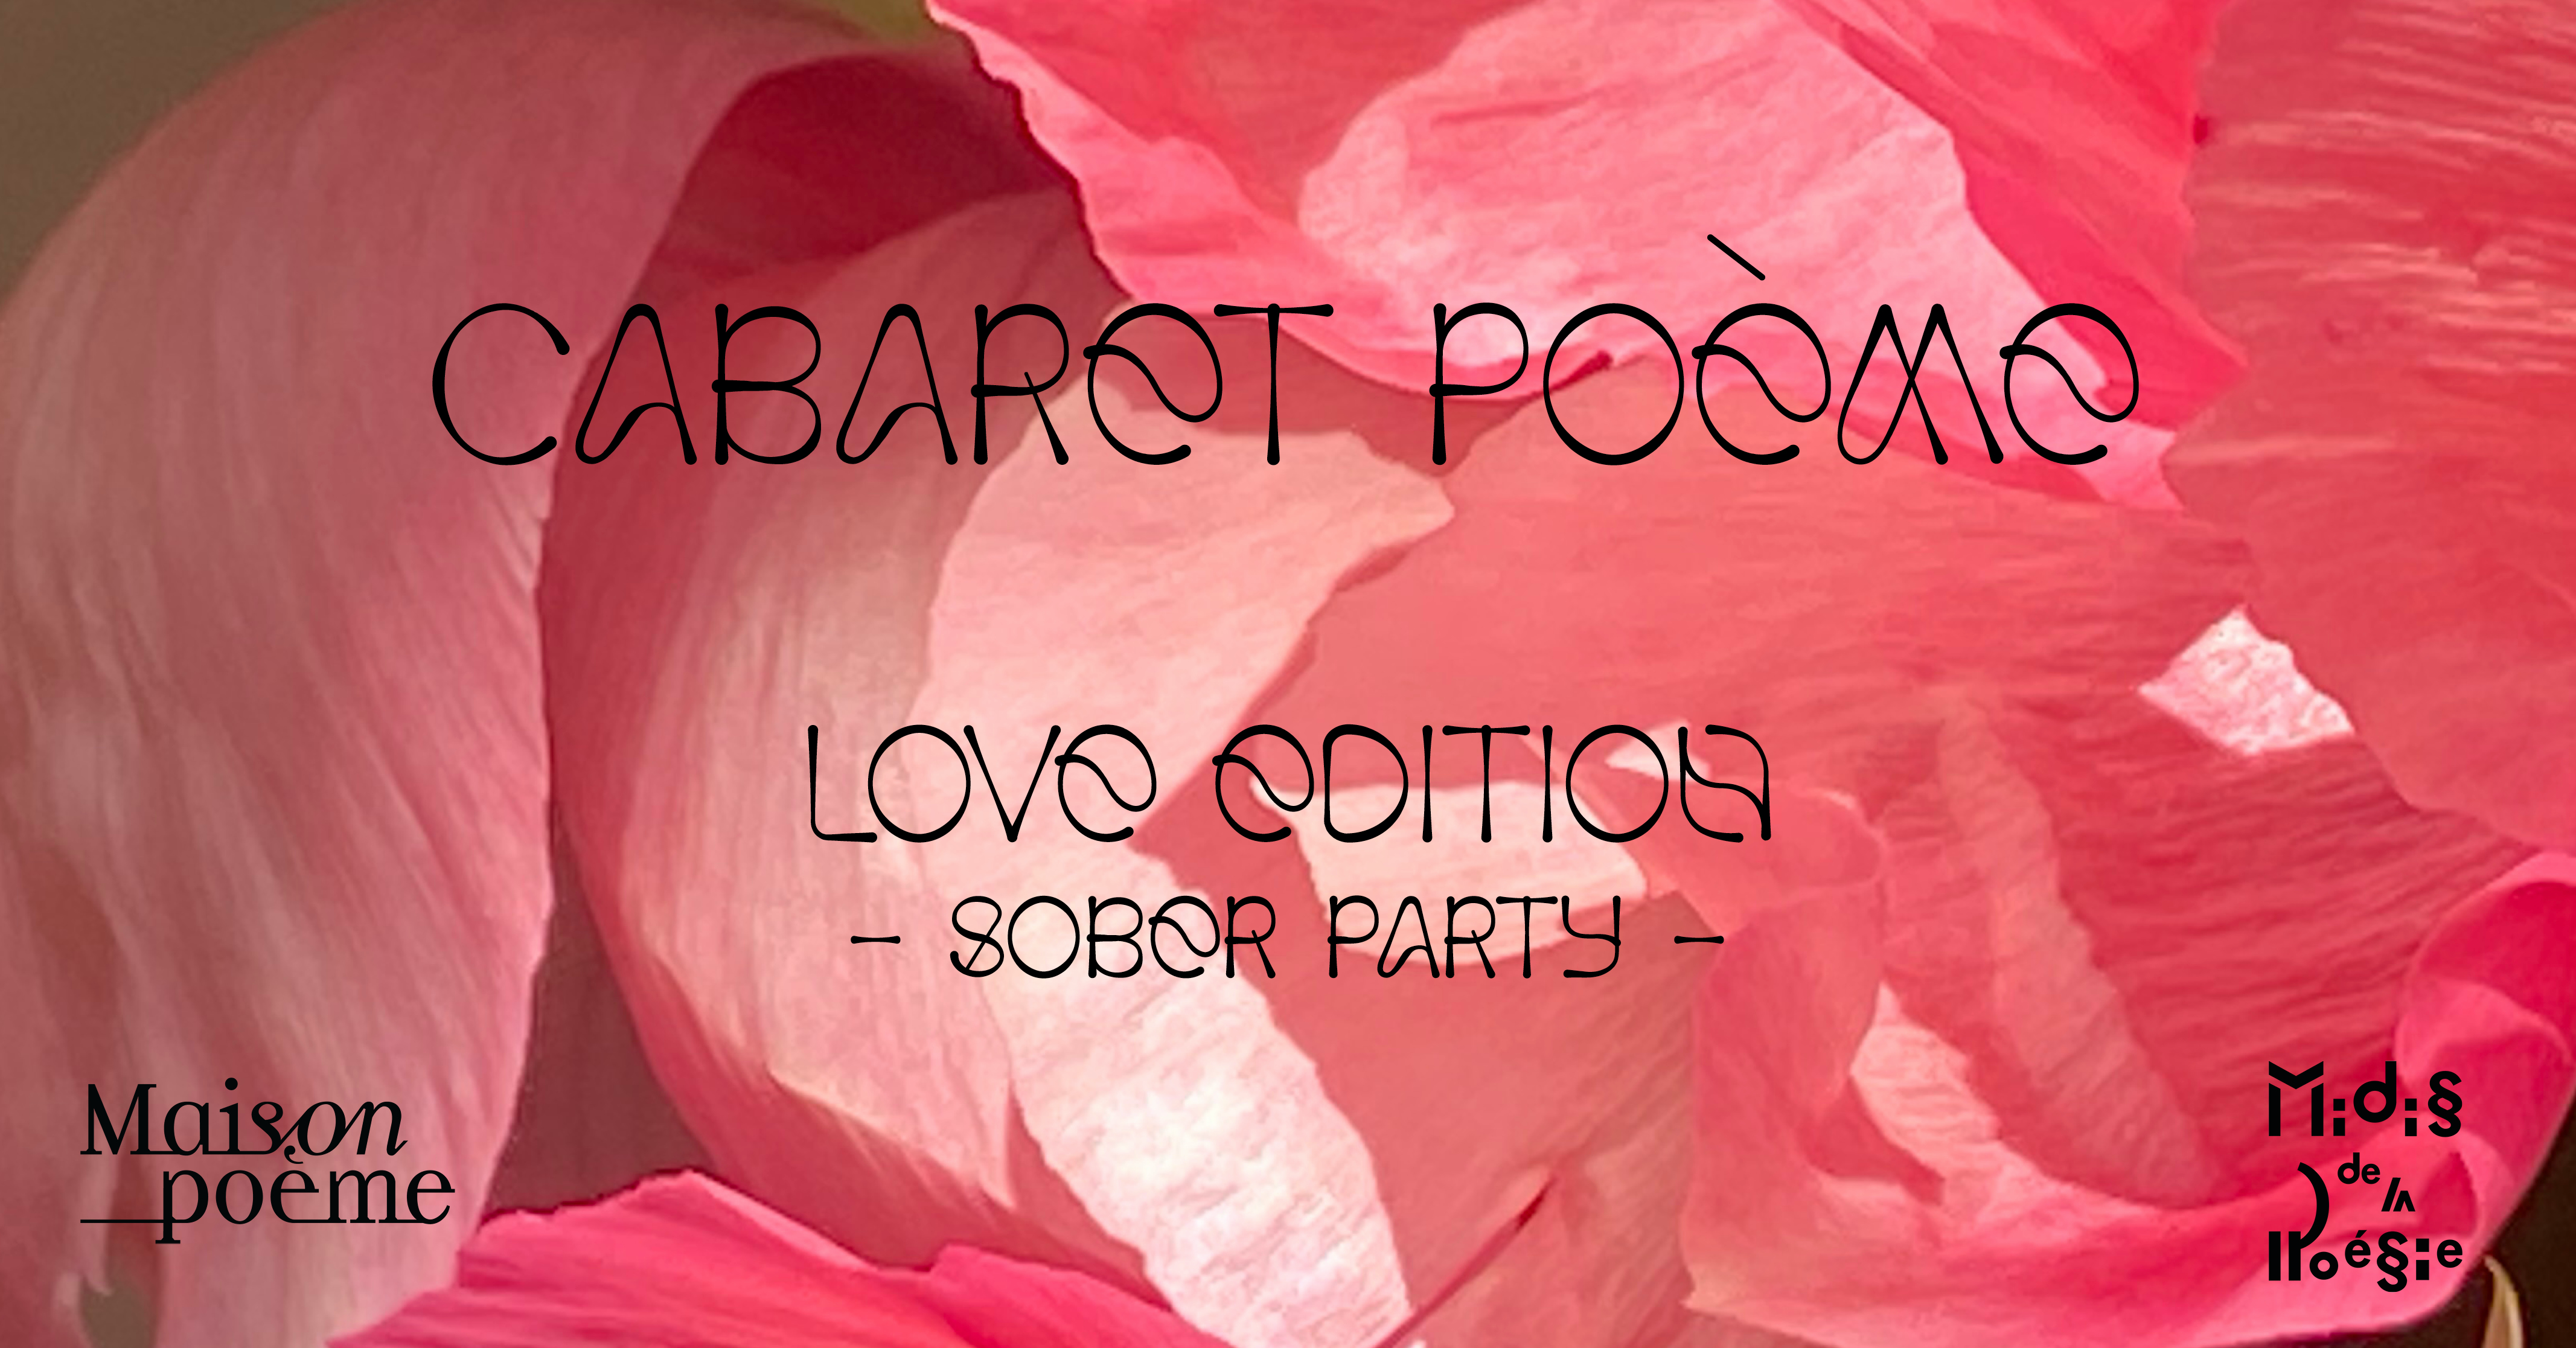 Cabaret-poeme 2